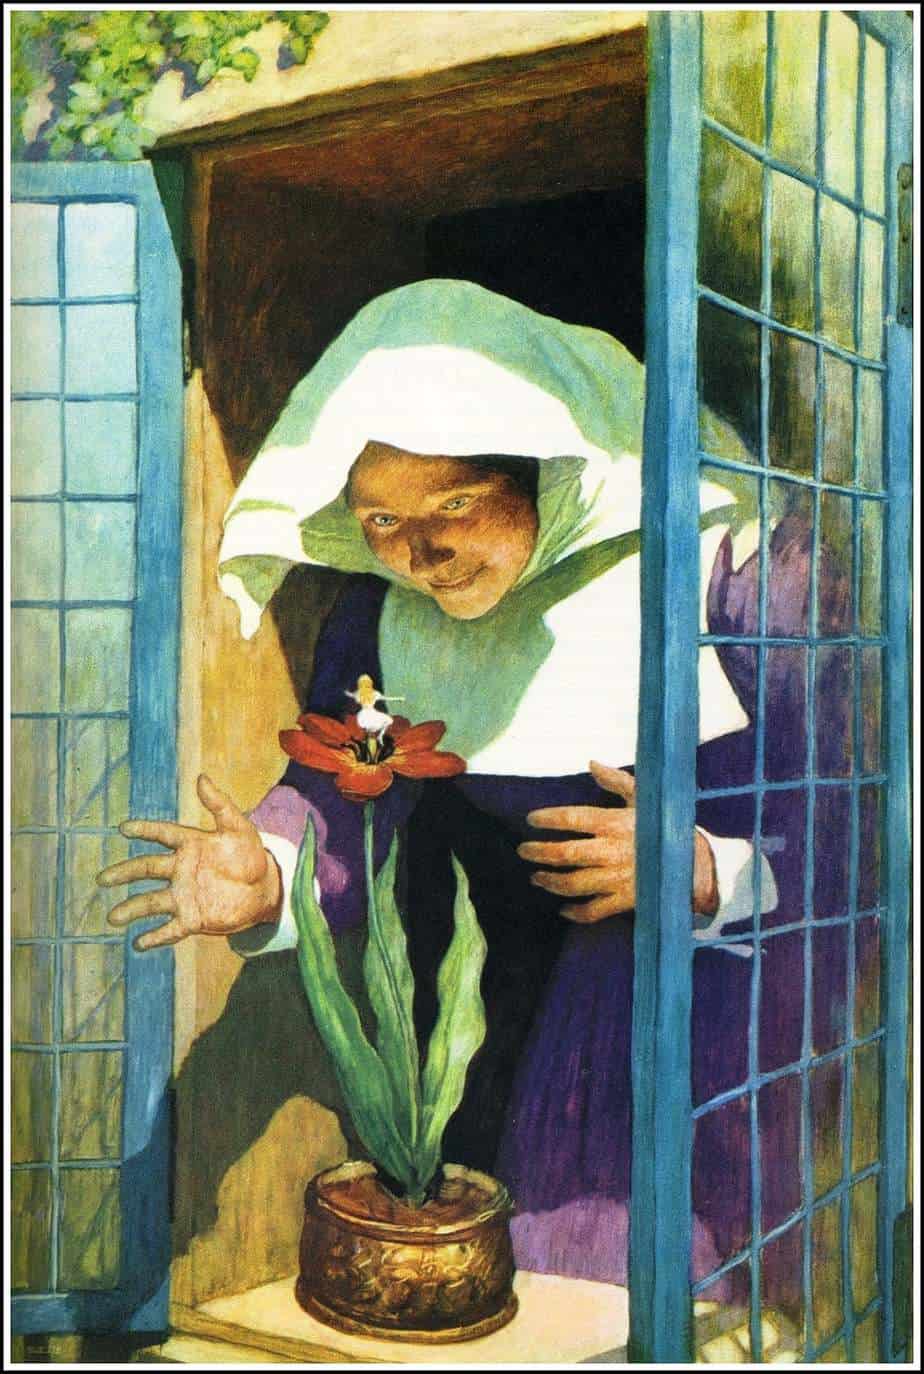 Thumbelina, N.C. Wyeth, 1921